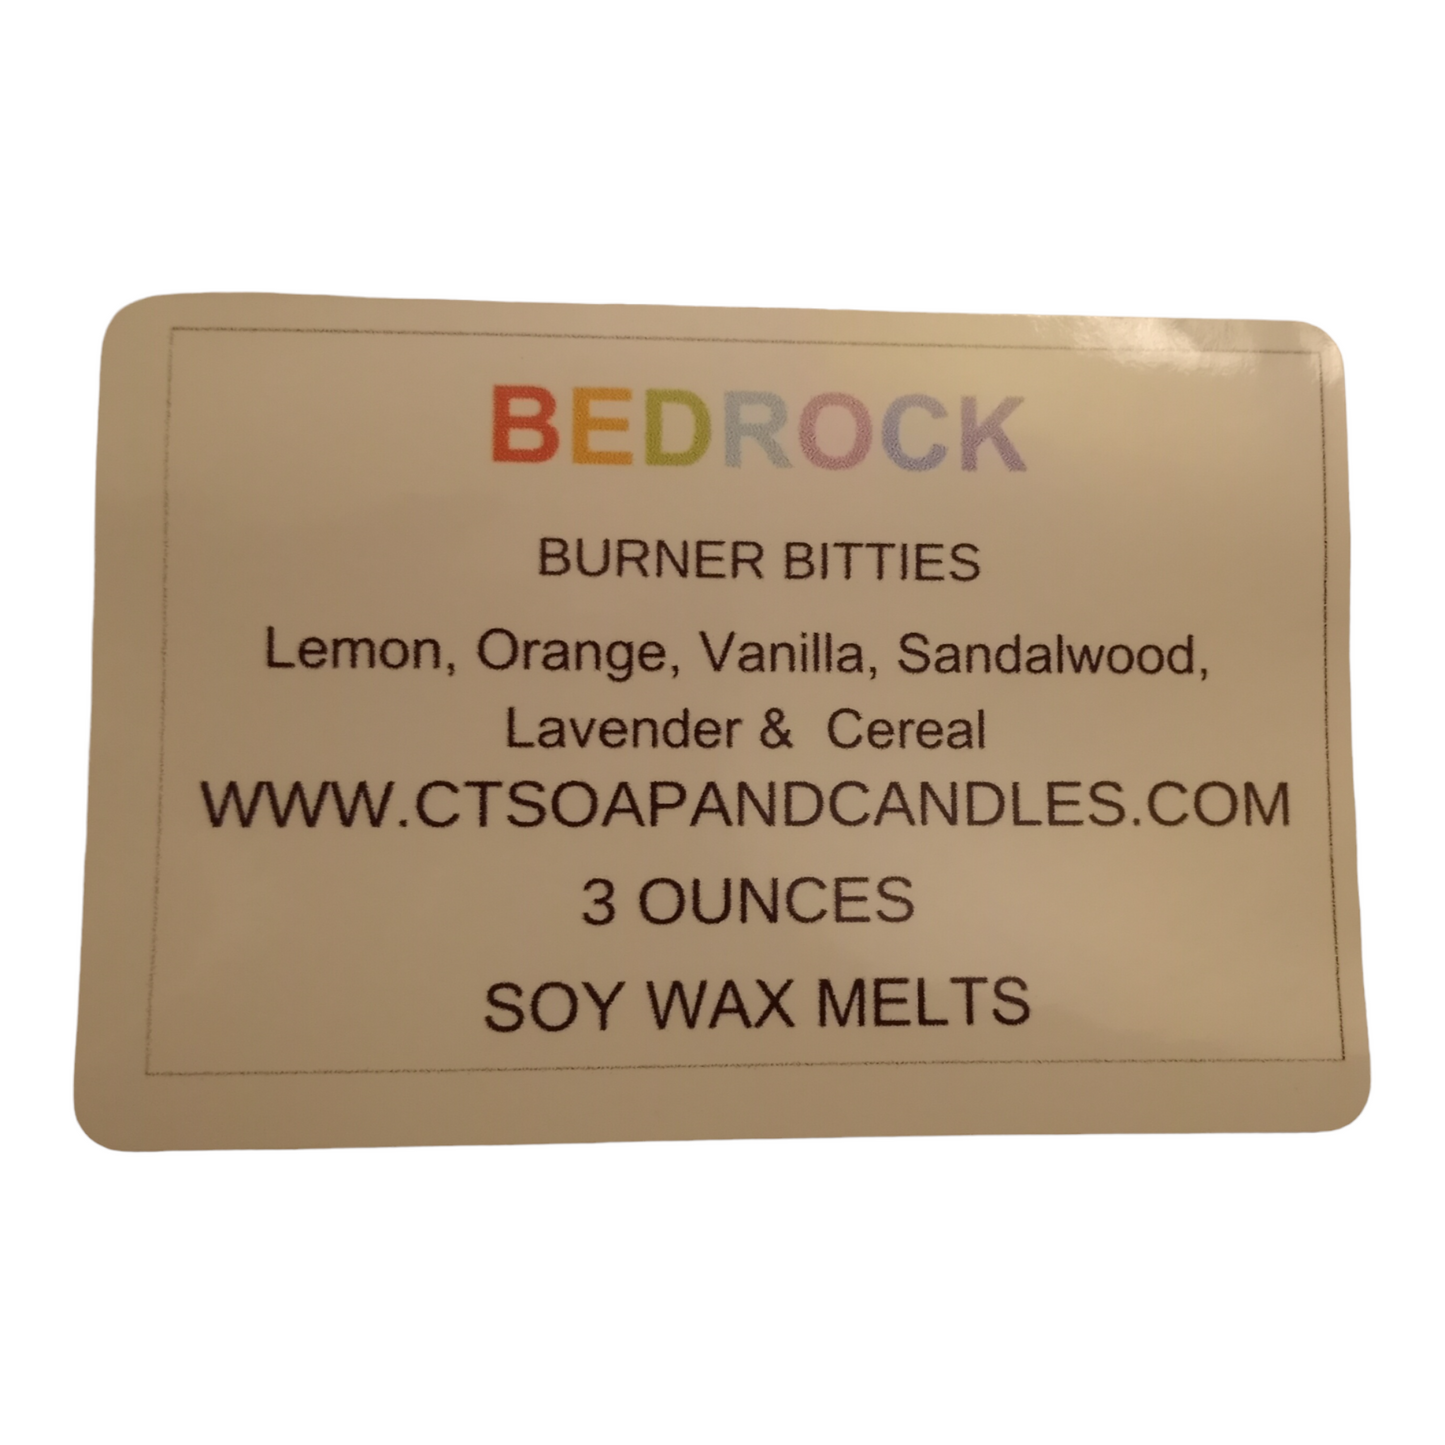 Bedrock Wax Melt Burner Bitties